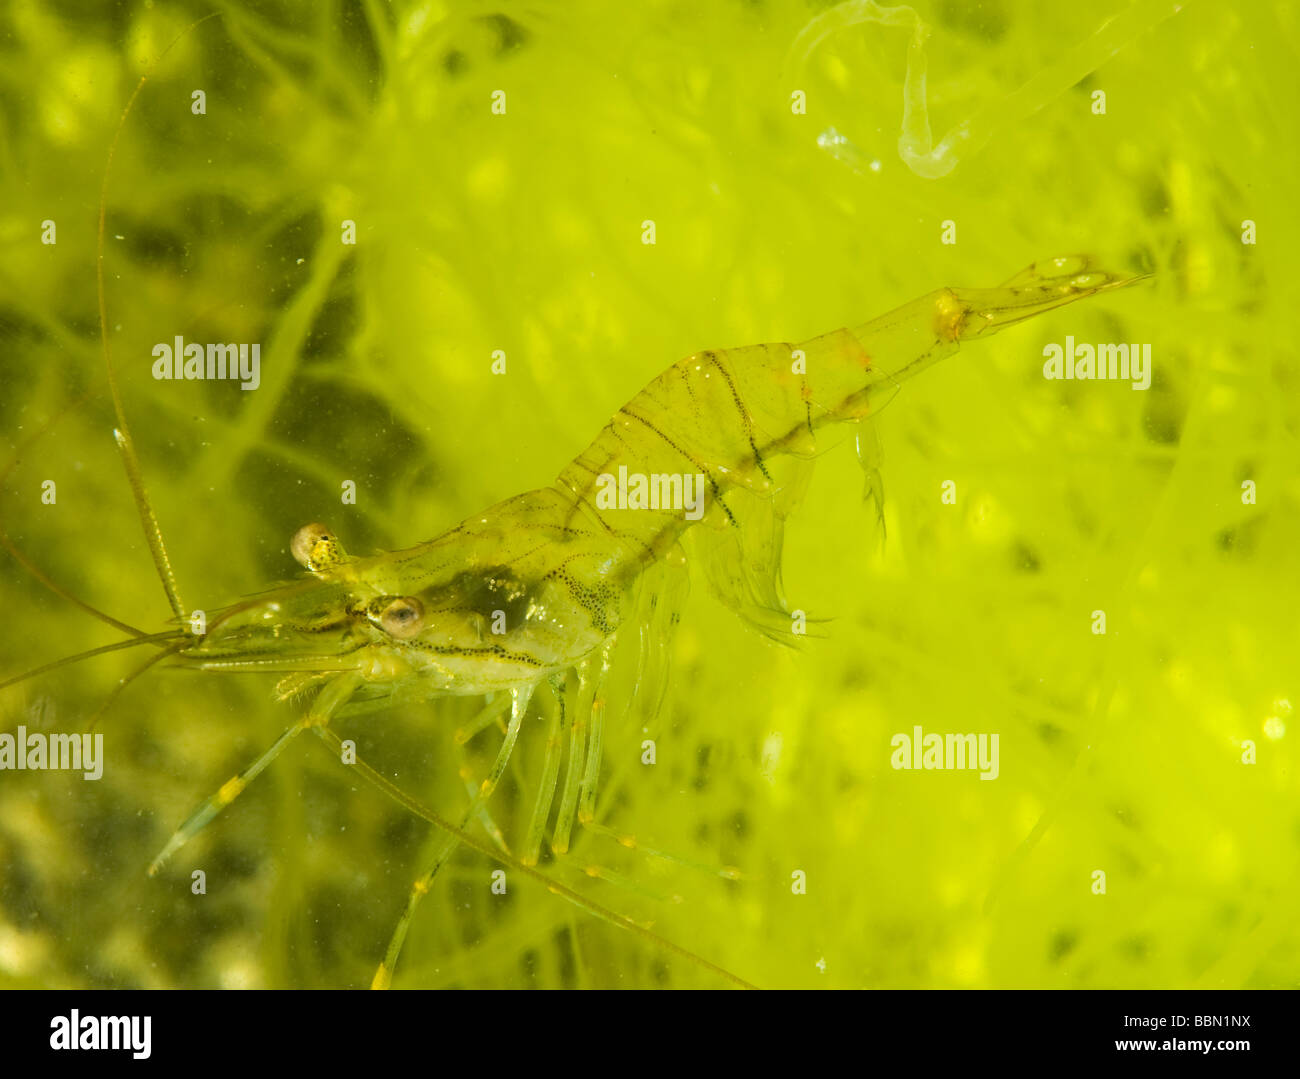 Rock Shrimp, Palaemon elegans, amongst green alges, Sweden Stock Photo